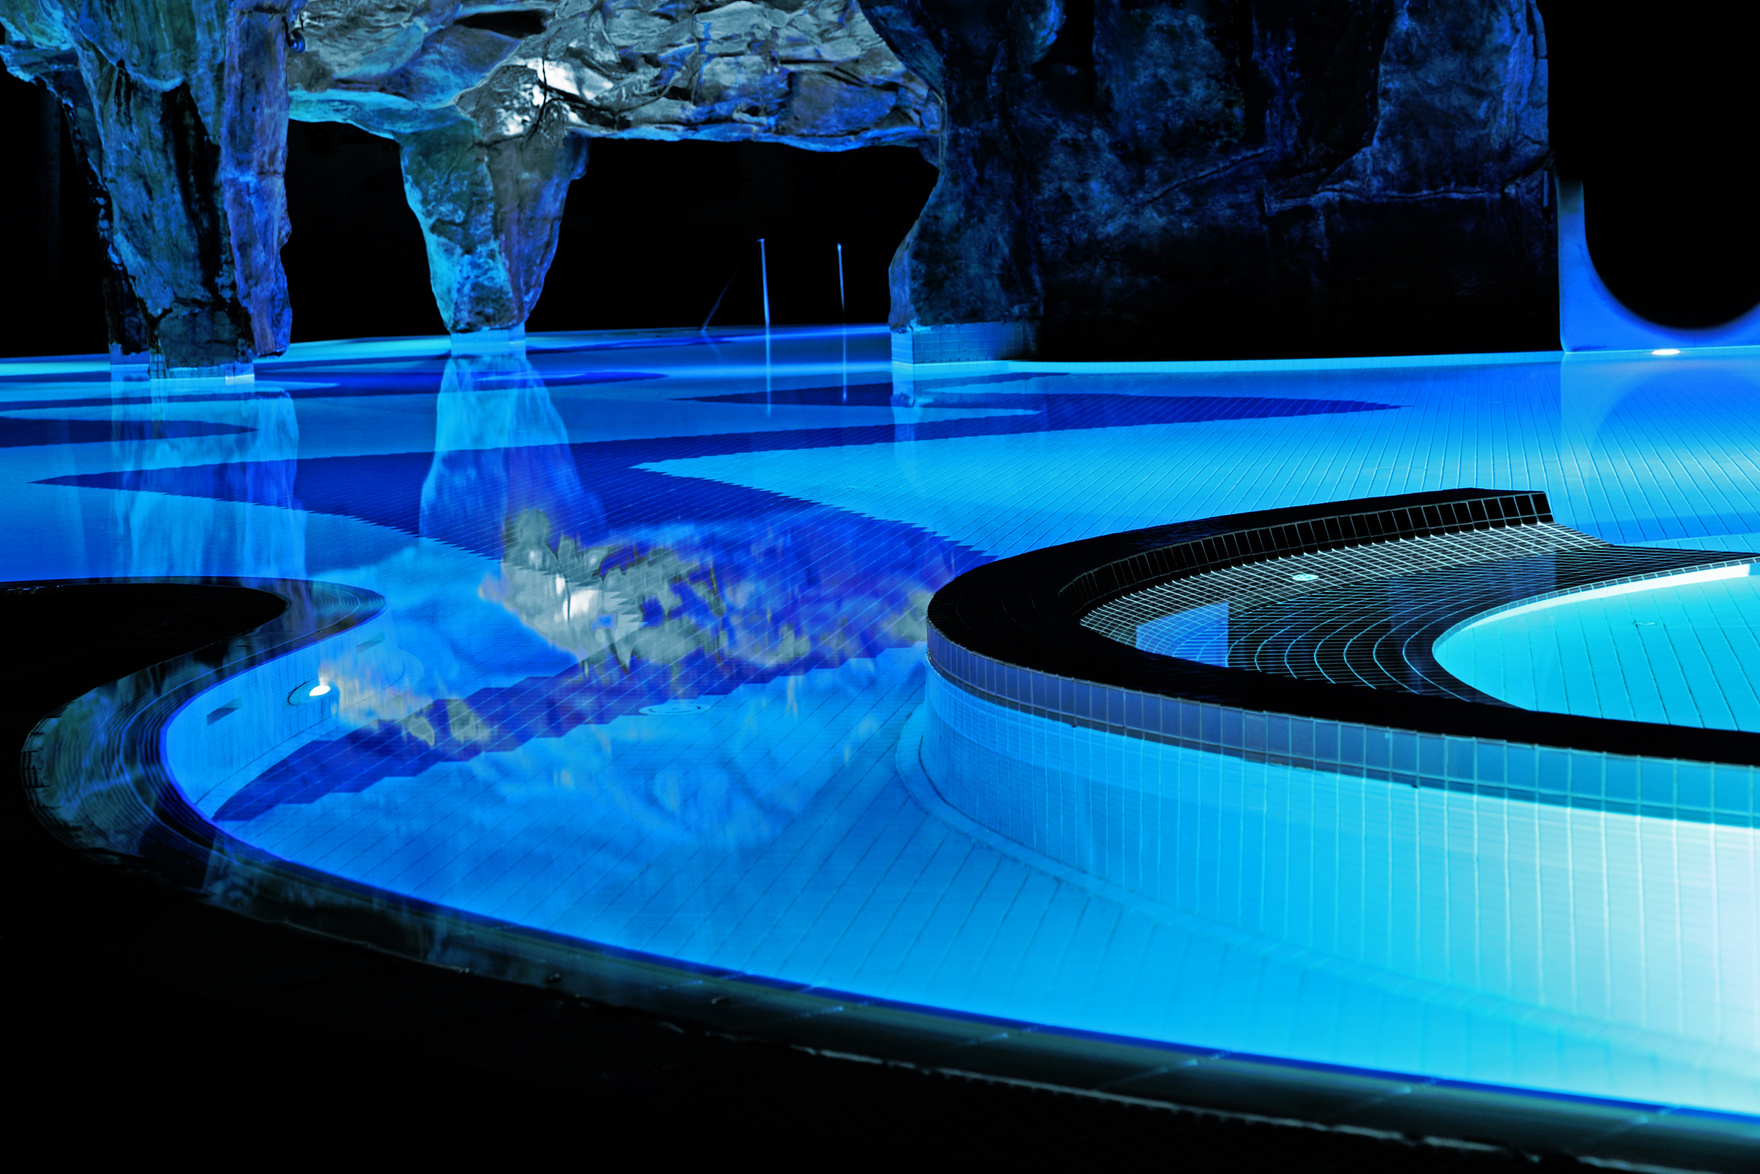 Swimming Pool in Neon Light.